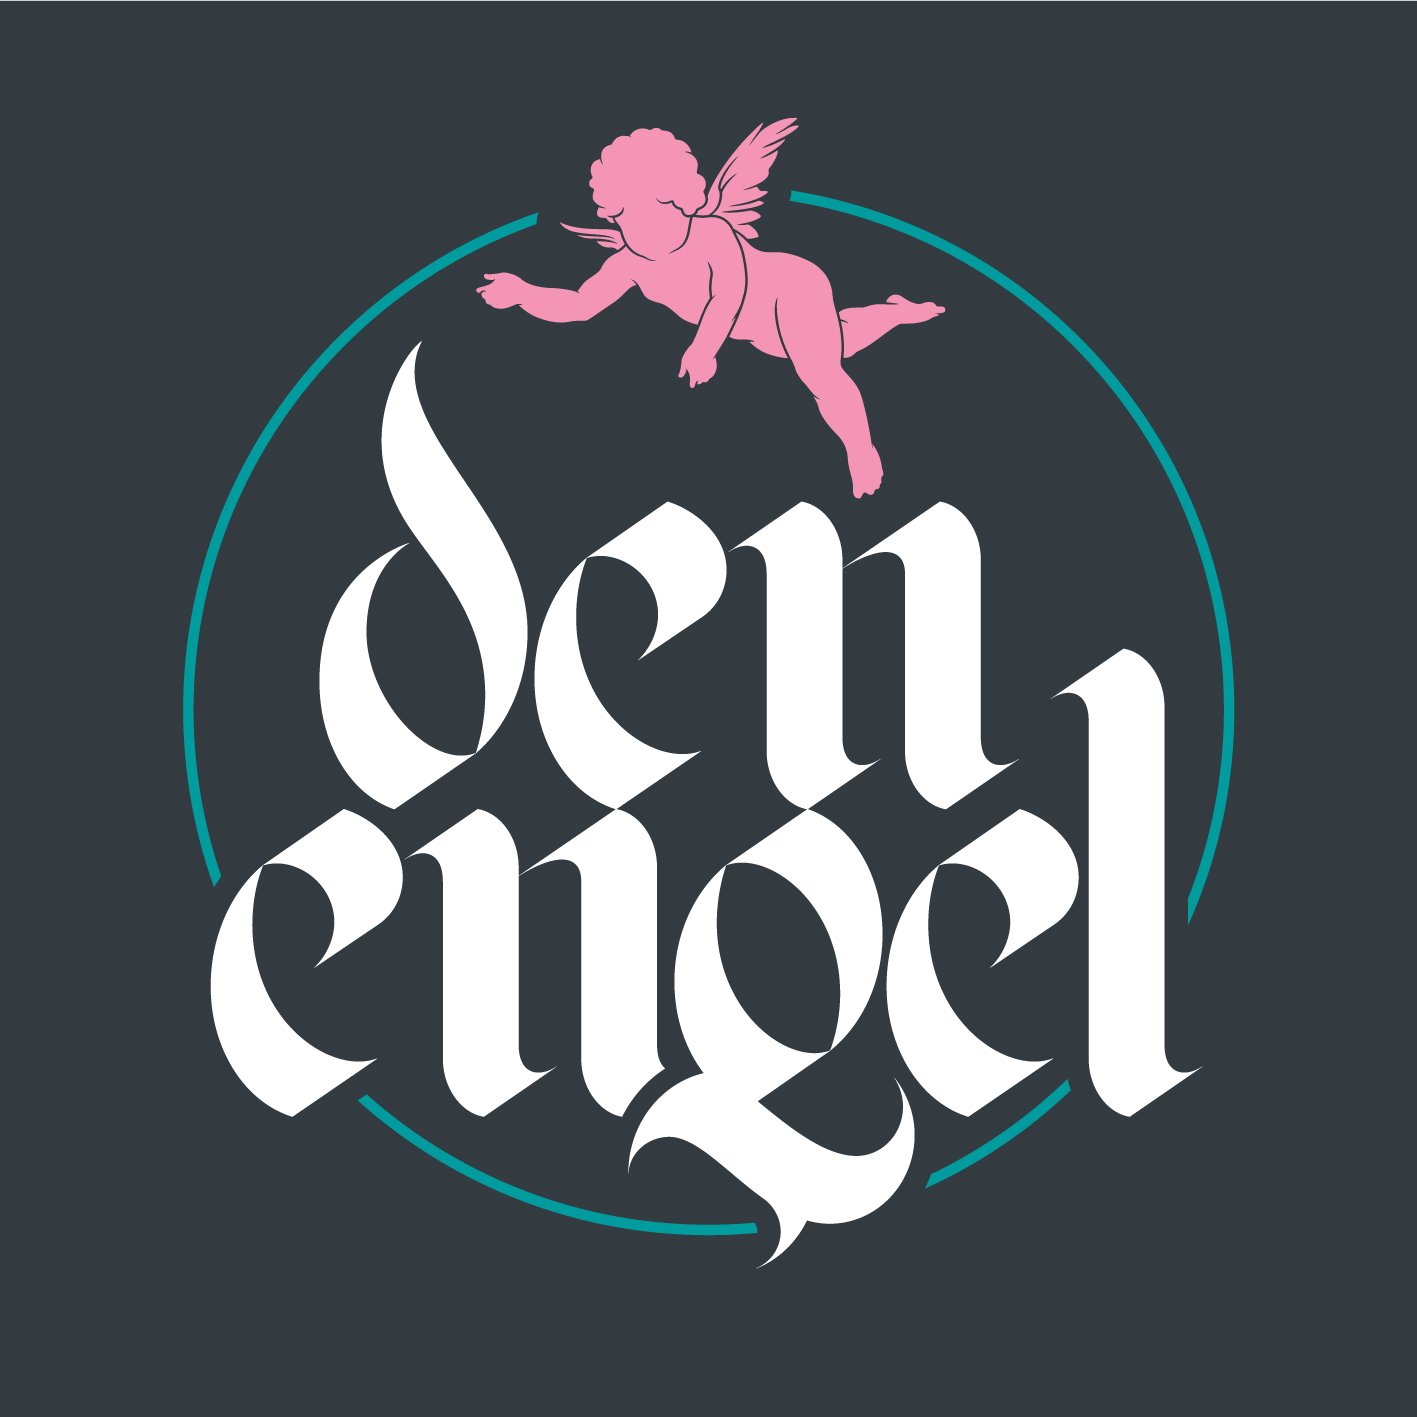 Den Engel logo design